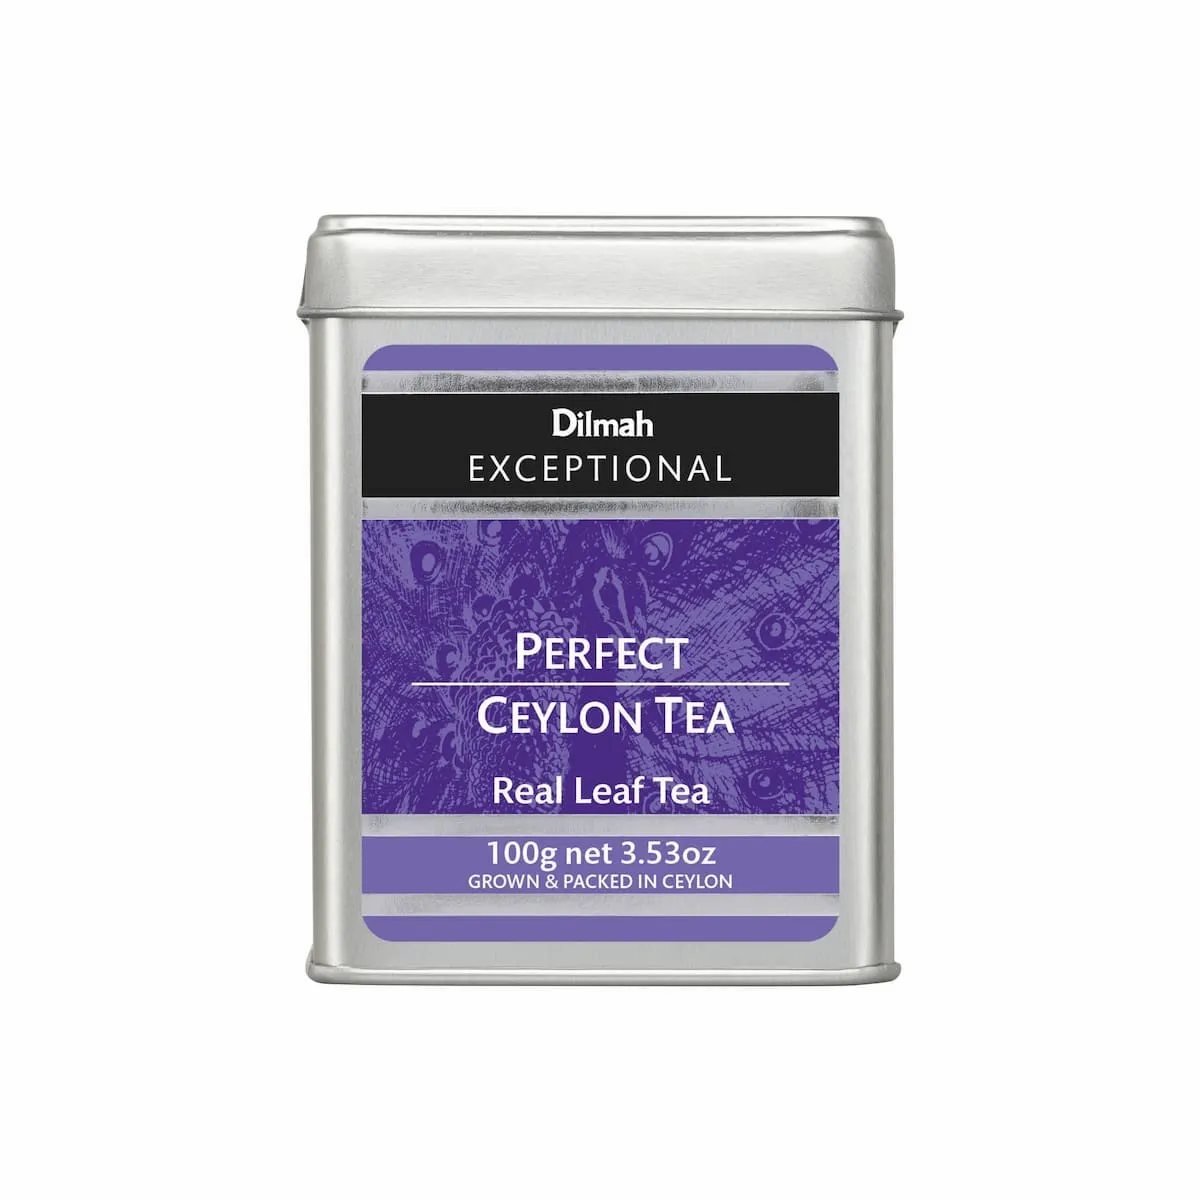 Perfect Ceylon Tea tin